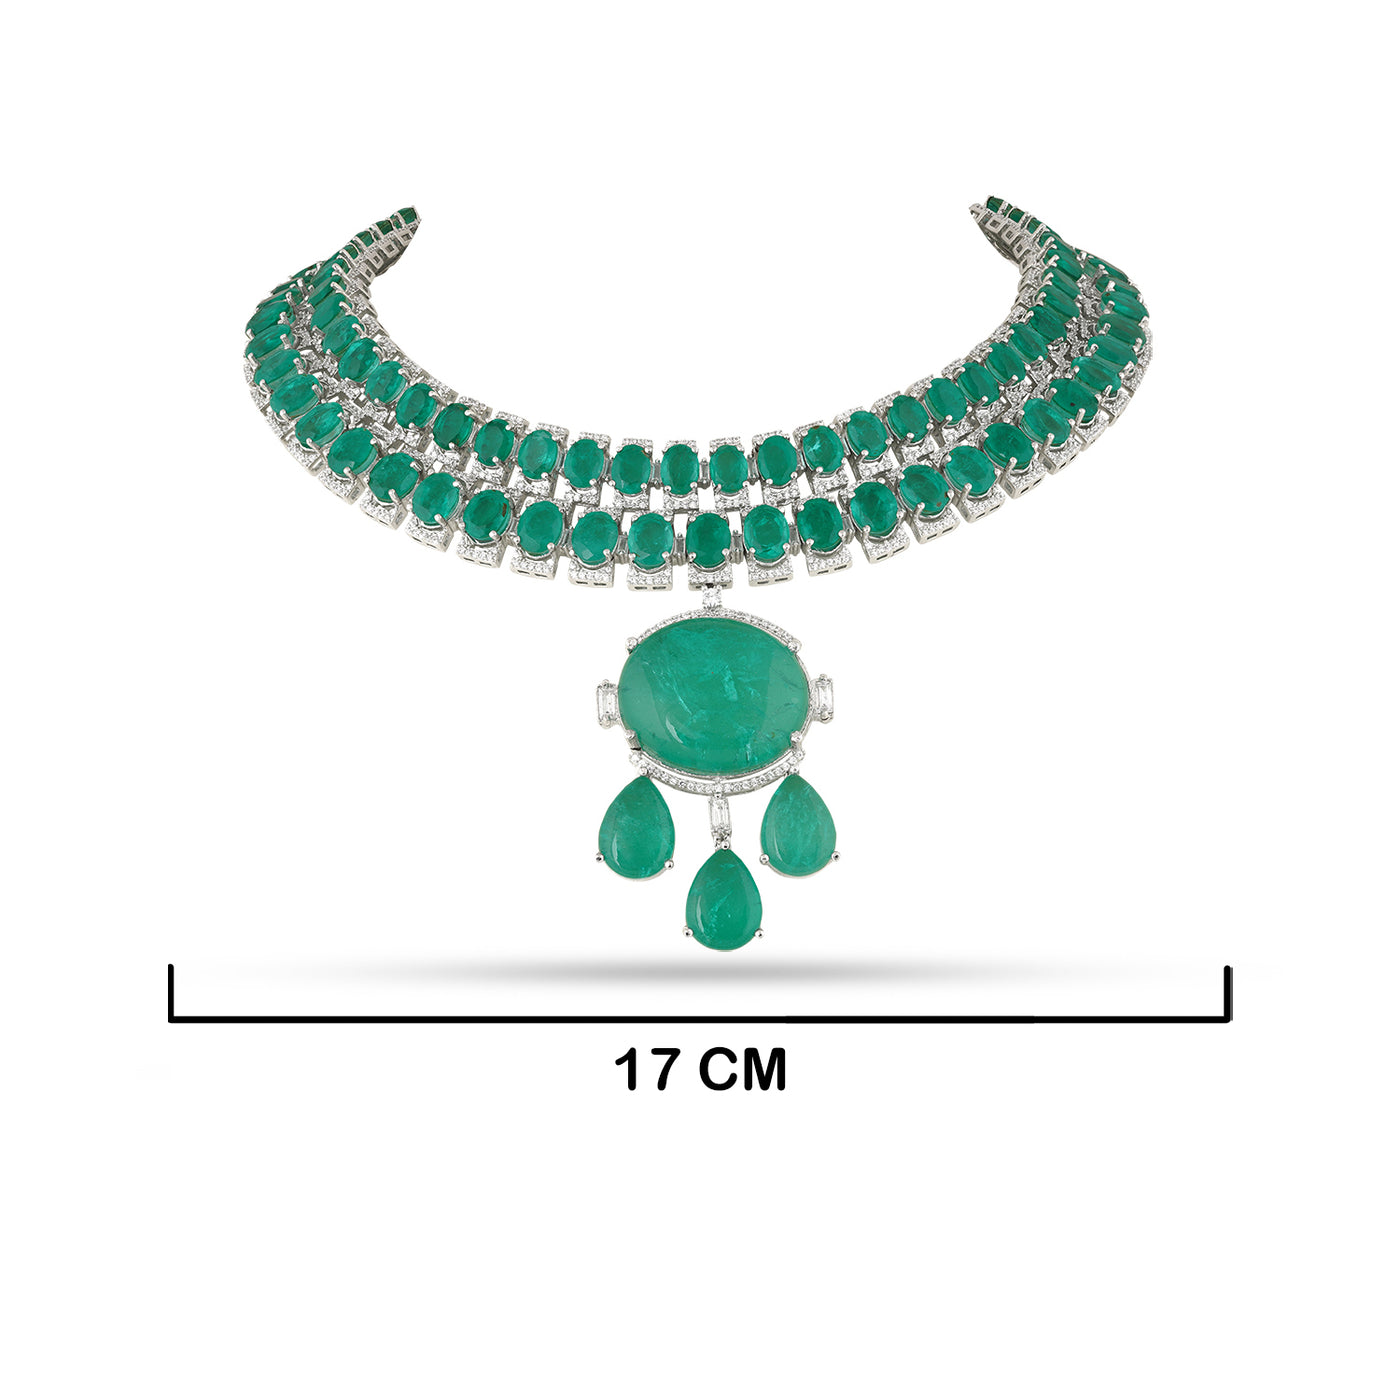 Feiyaz - Green Doublet necklace set